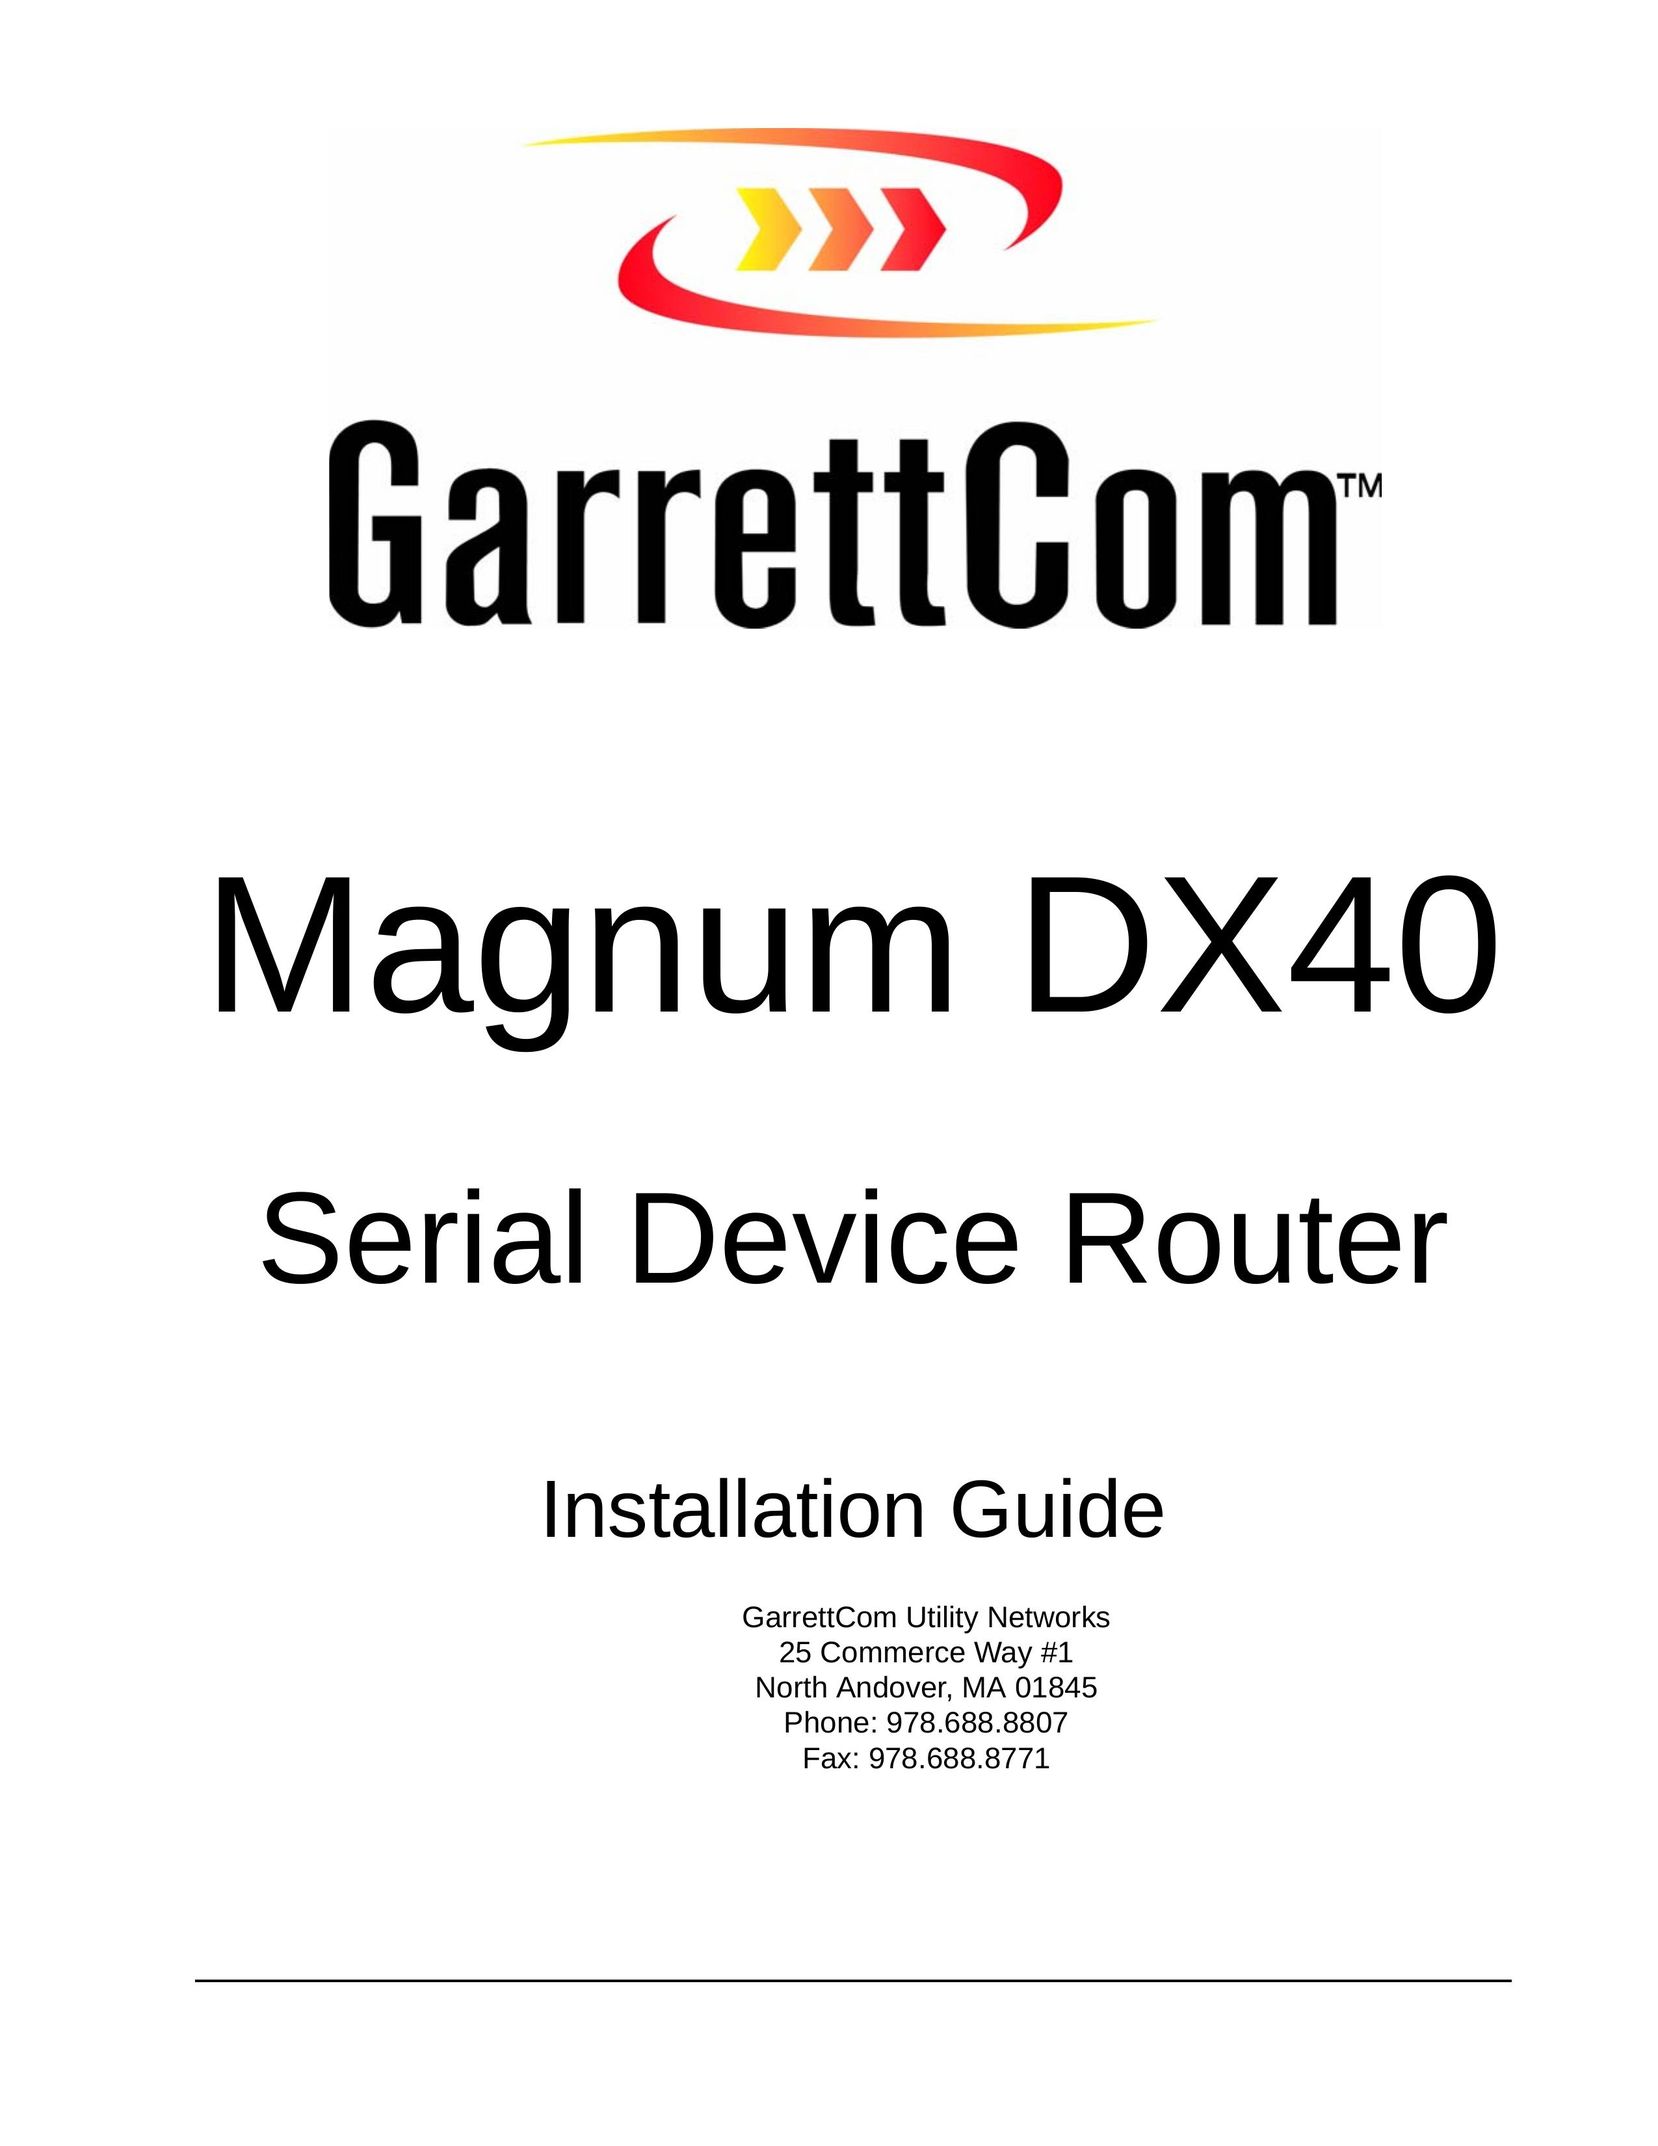 GarrettCom DX40 Network Router User Manual